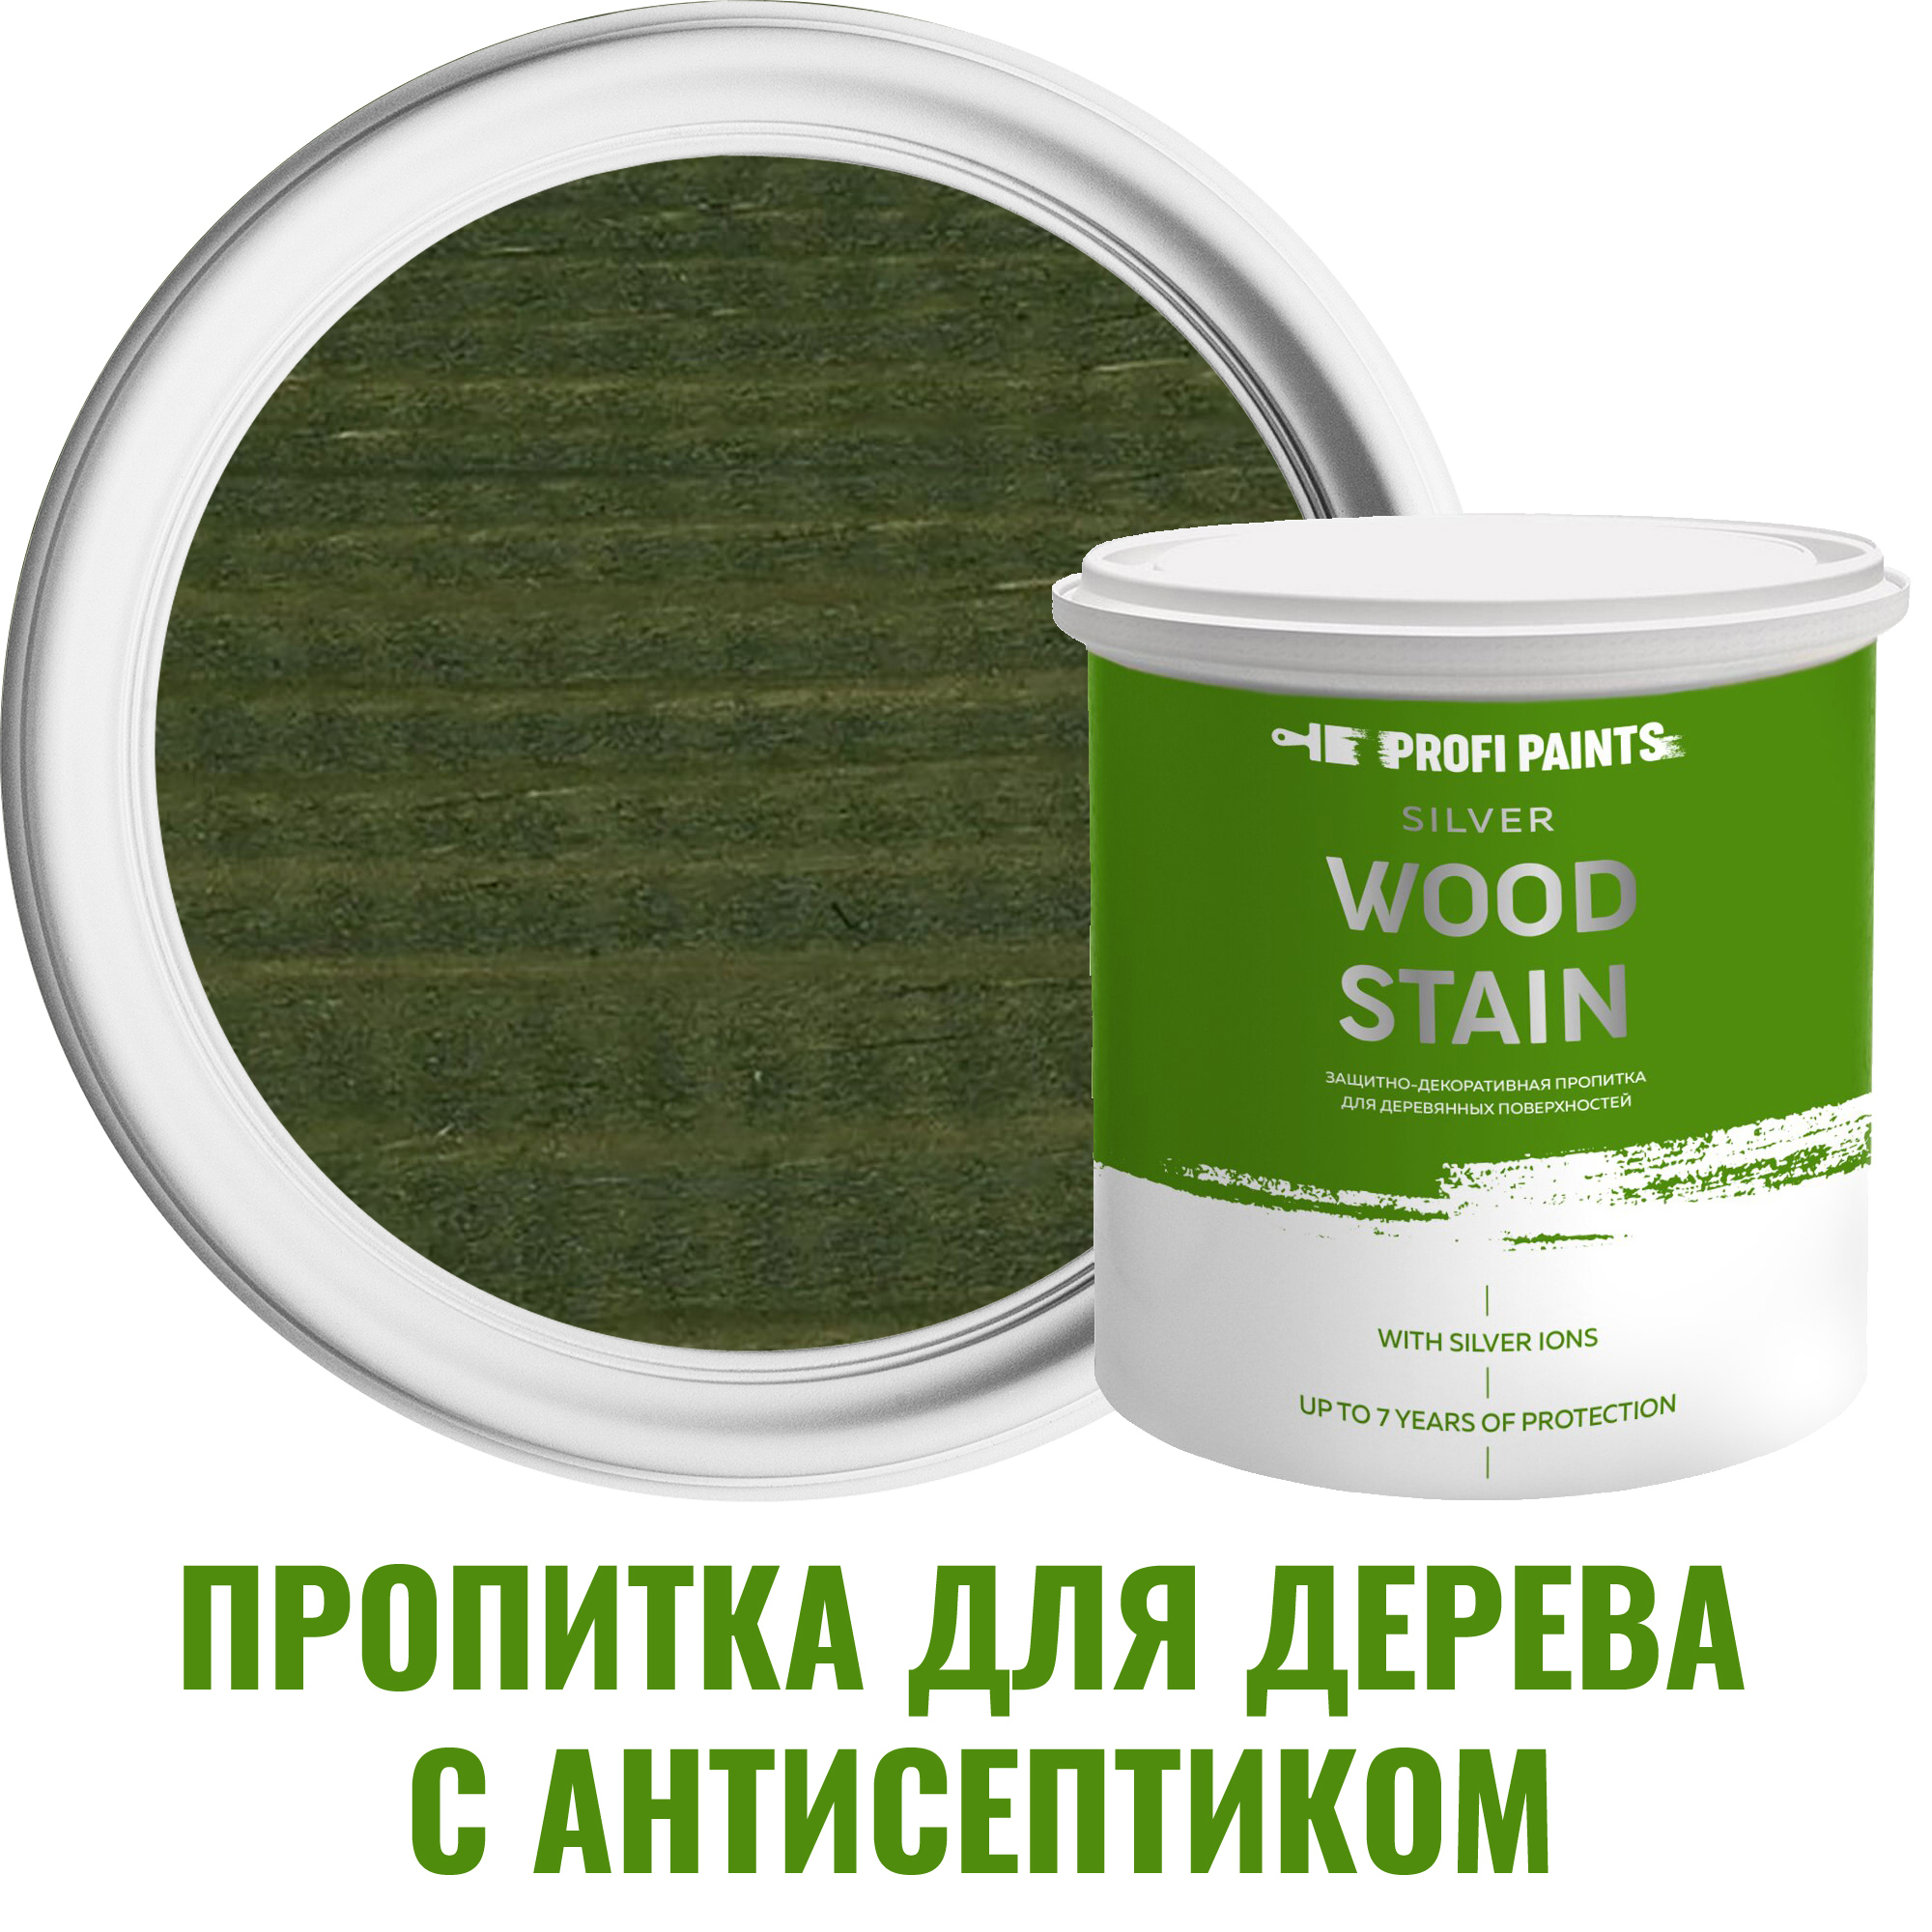 91095293 Пропитка для дерева с антисептиком без запаха SILVER WOOD STAIN Зелёный 2.7 STLM-0481659 PROFIPAINTS